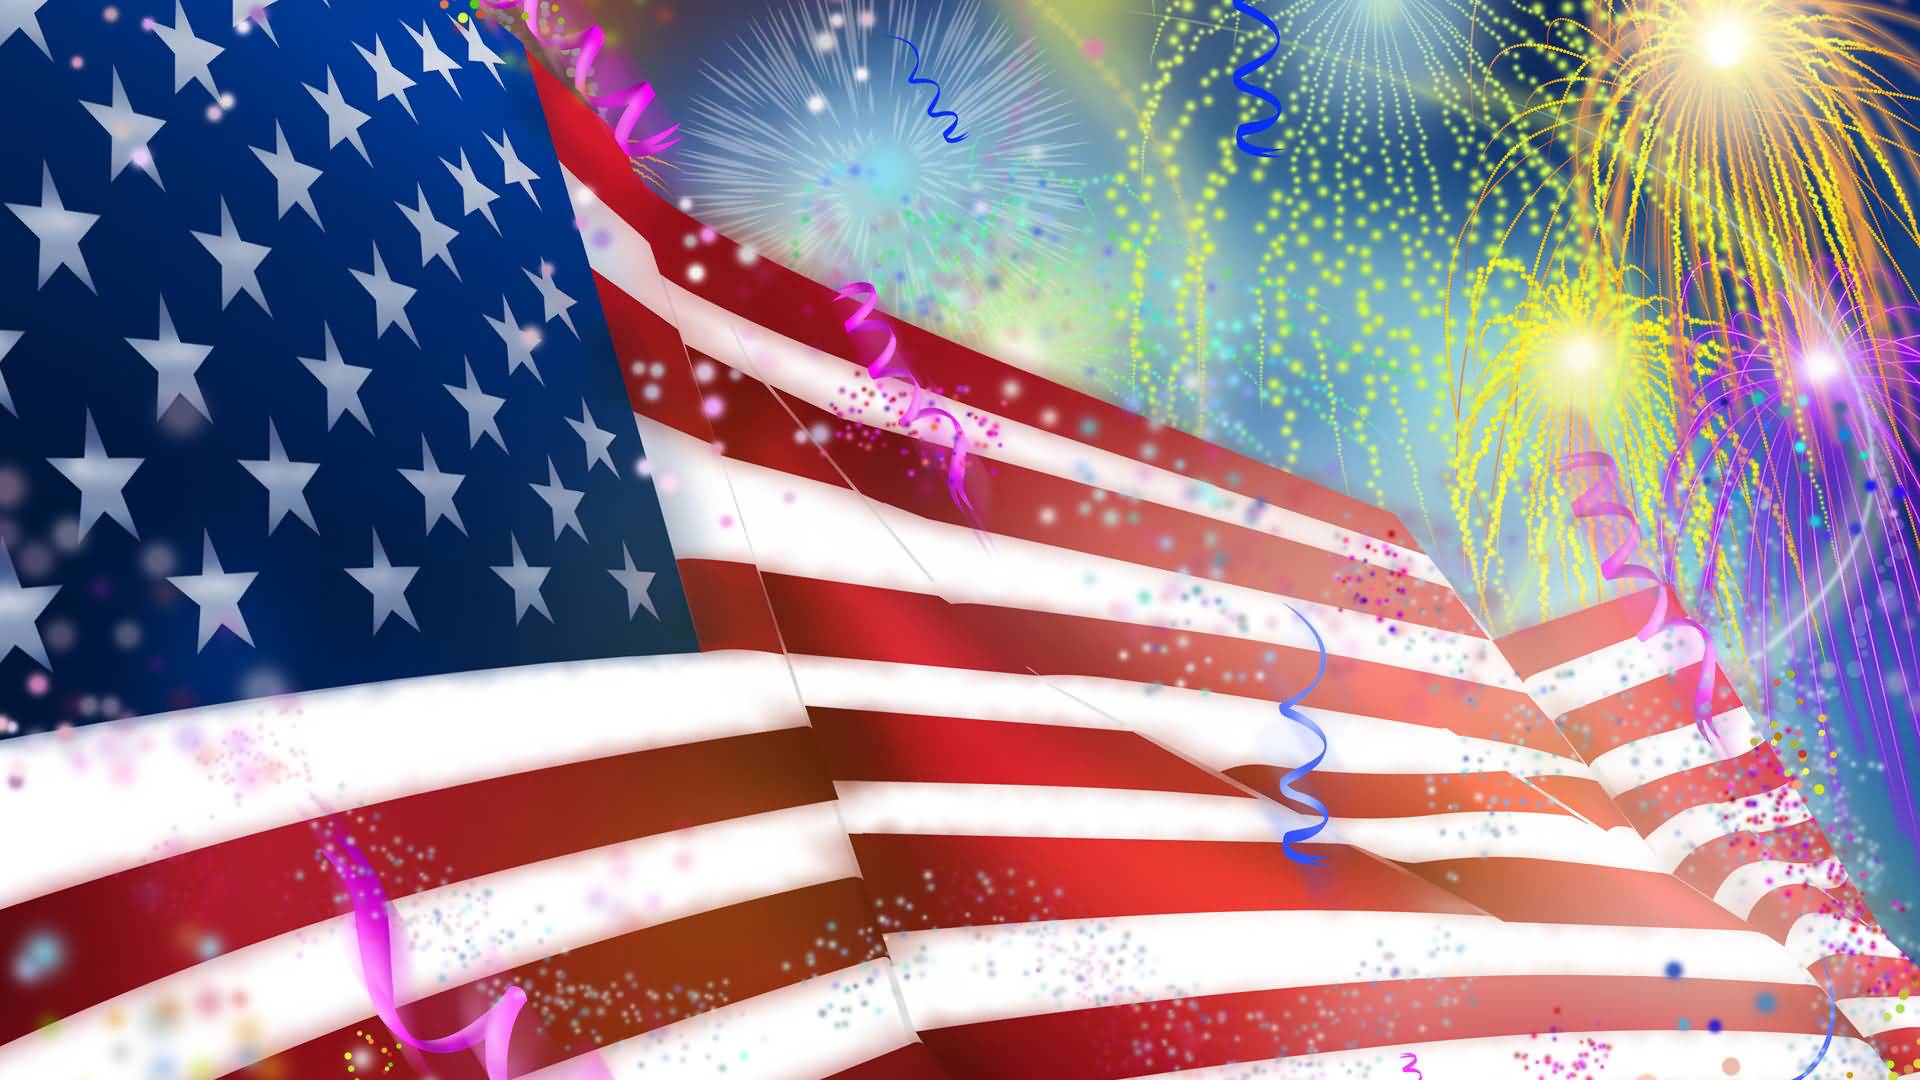 Flag Fireworks Wallpapers Top Free Flag Fireworks Backgrounds